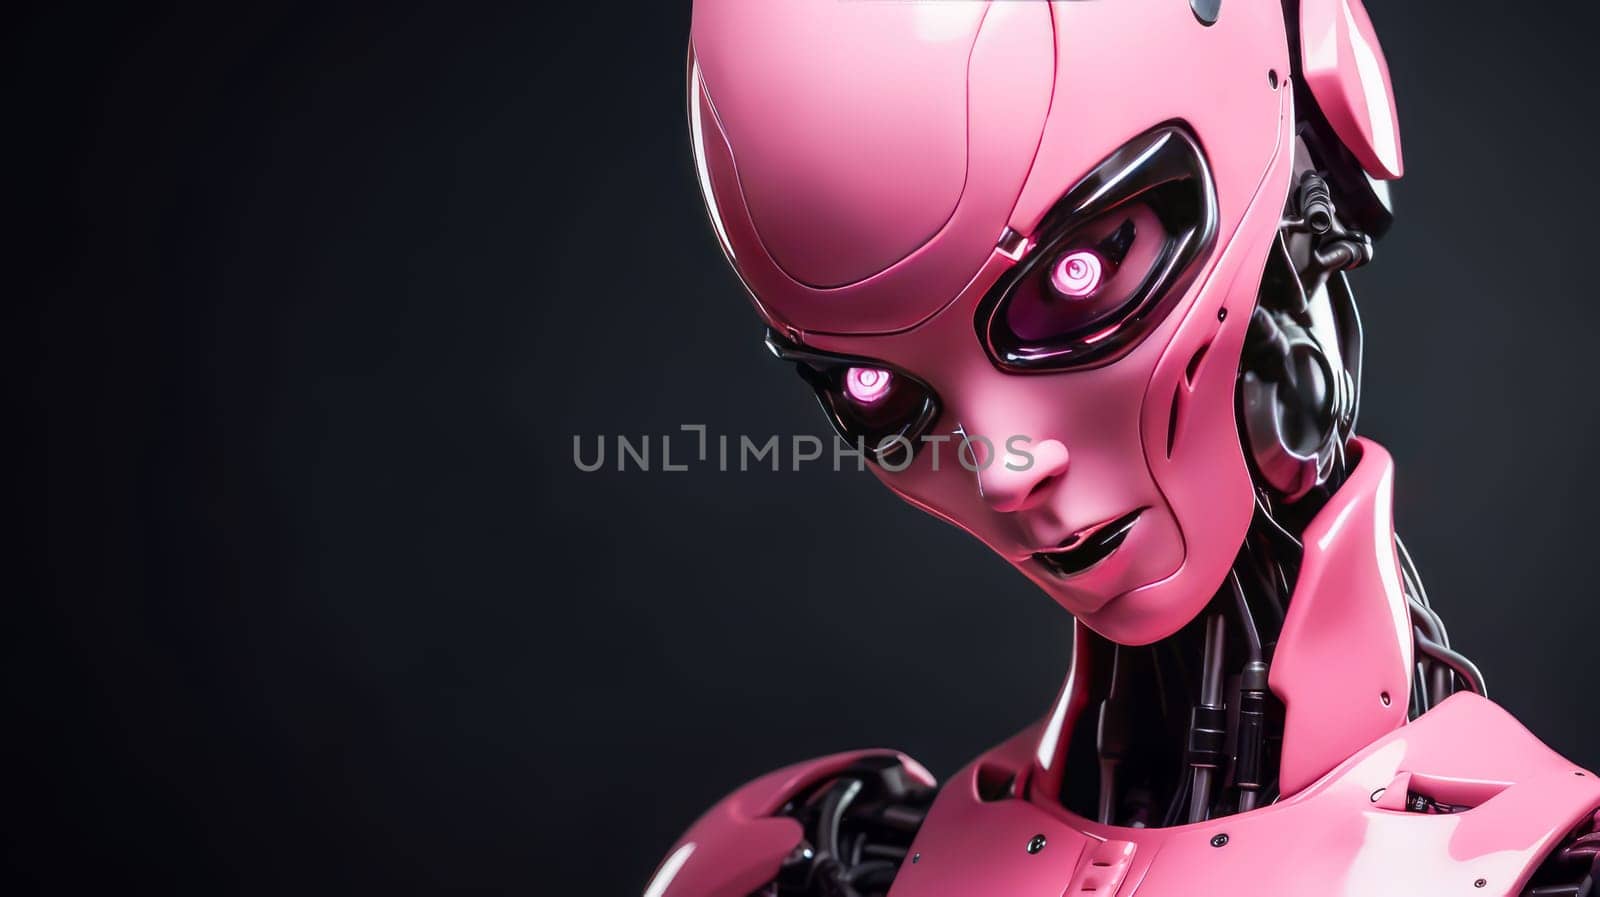 Pink evil robot on black background by Alla_Yurtayeva